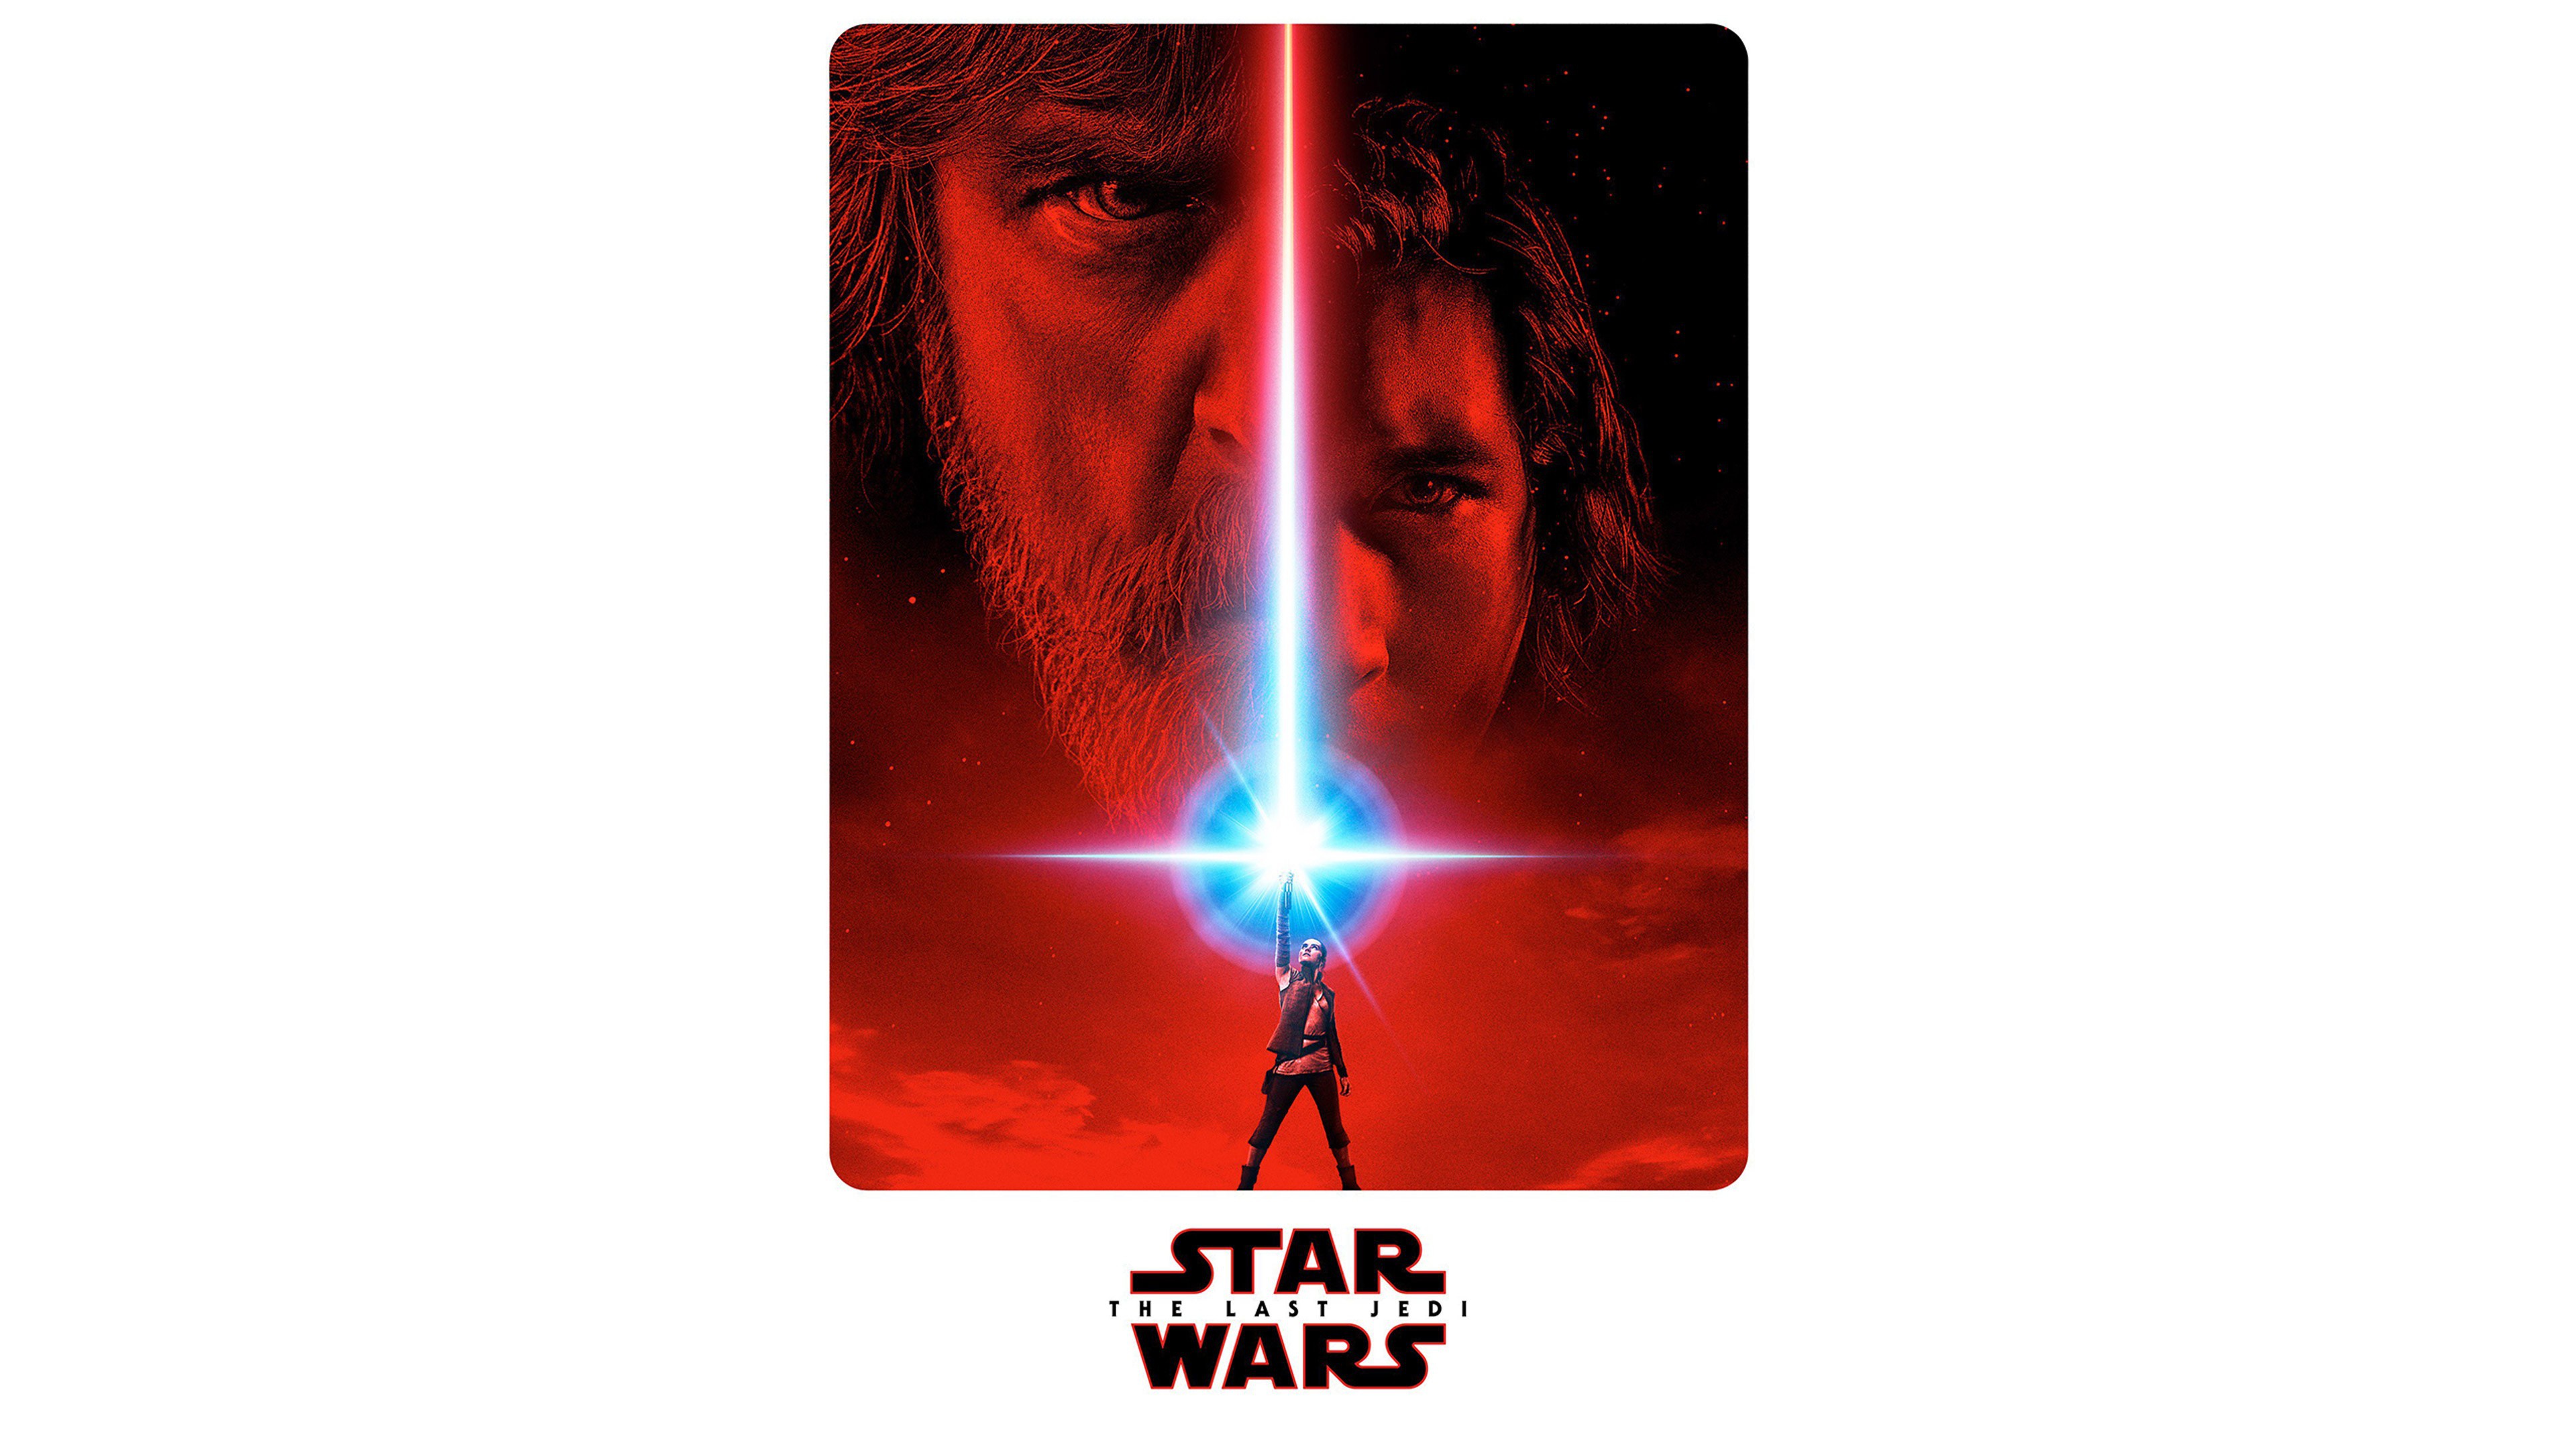 Luke Skywalker, Star Wars, Star Wars: The Last Jedi, Lightsaber, Movie poster Wallpaper